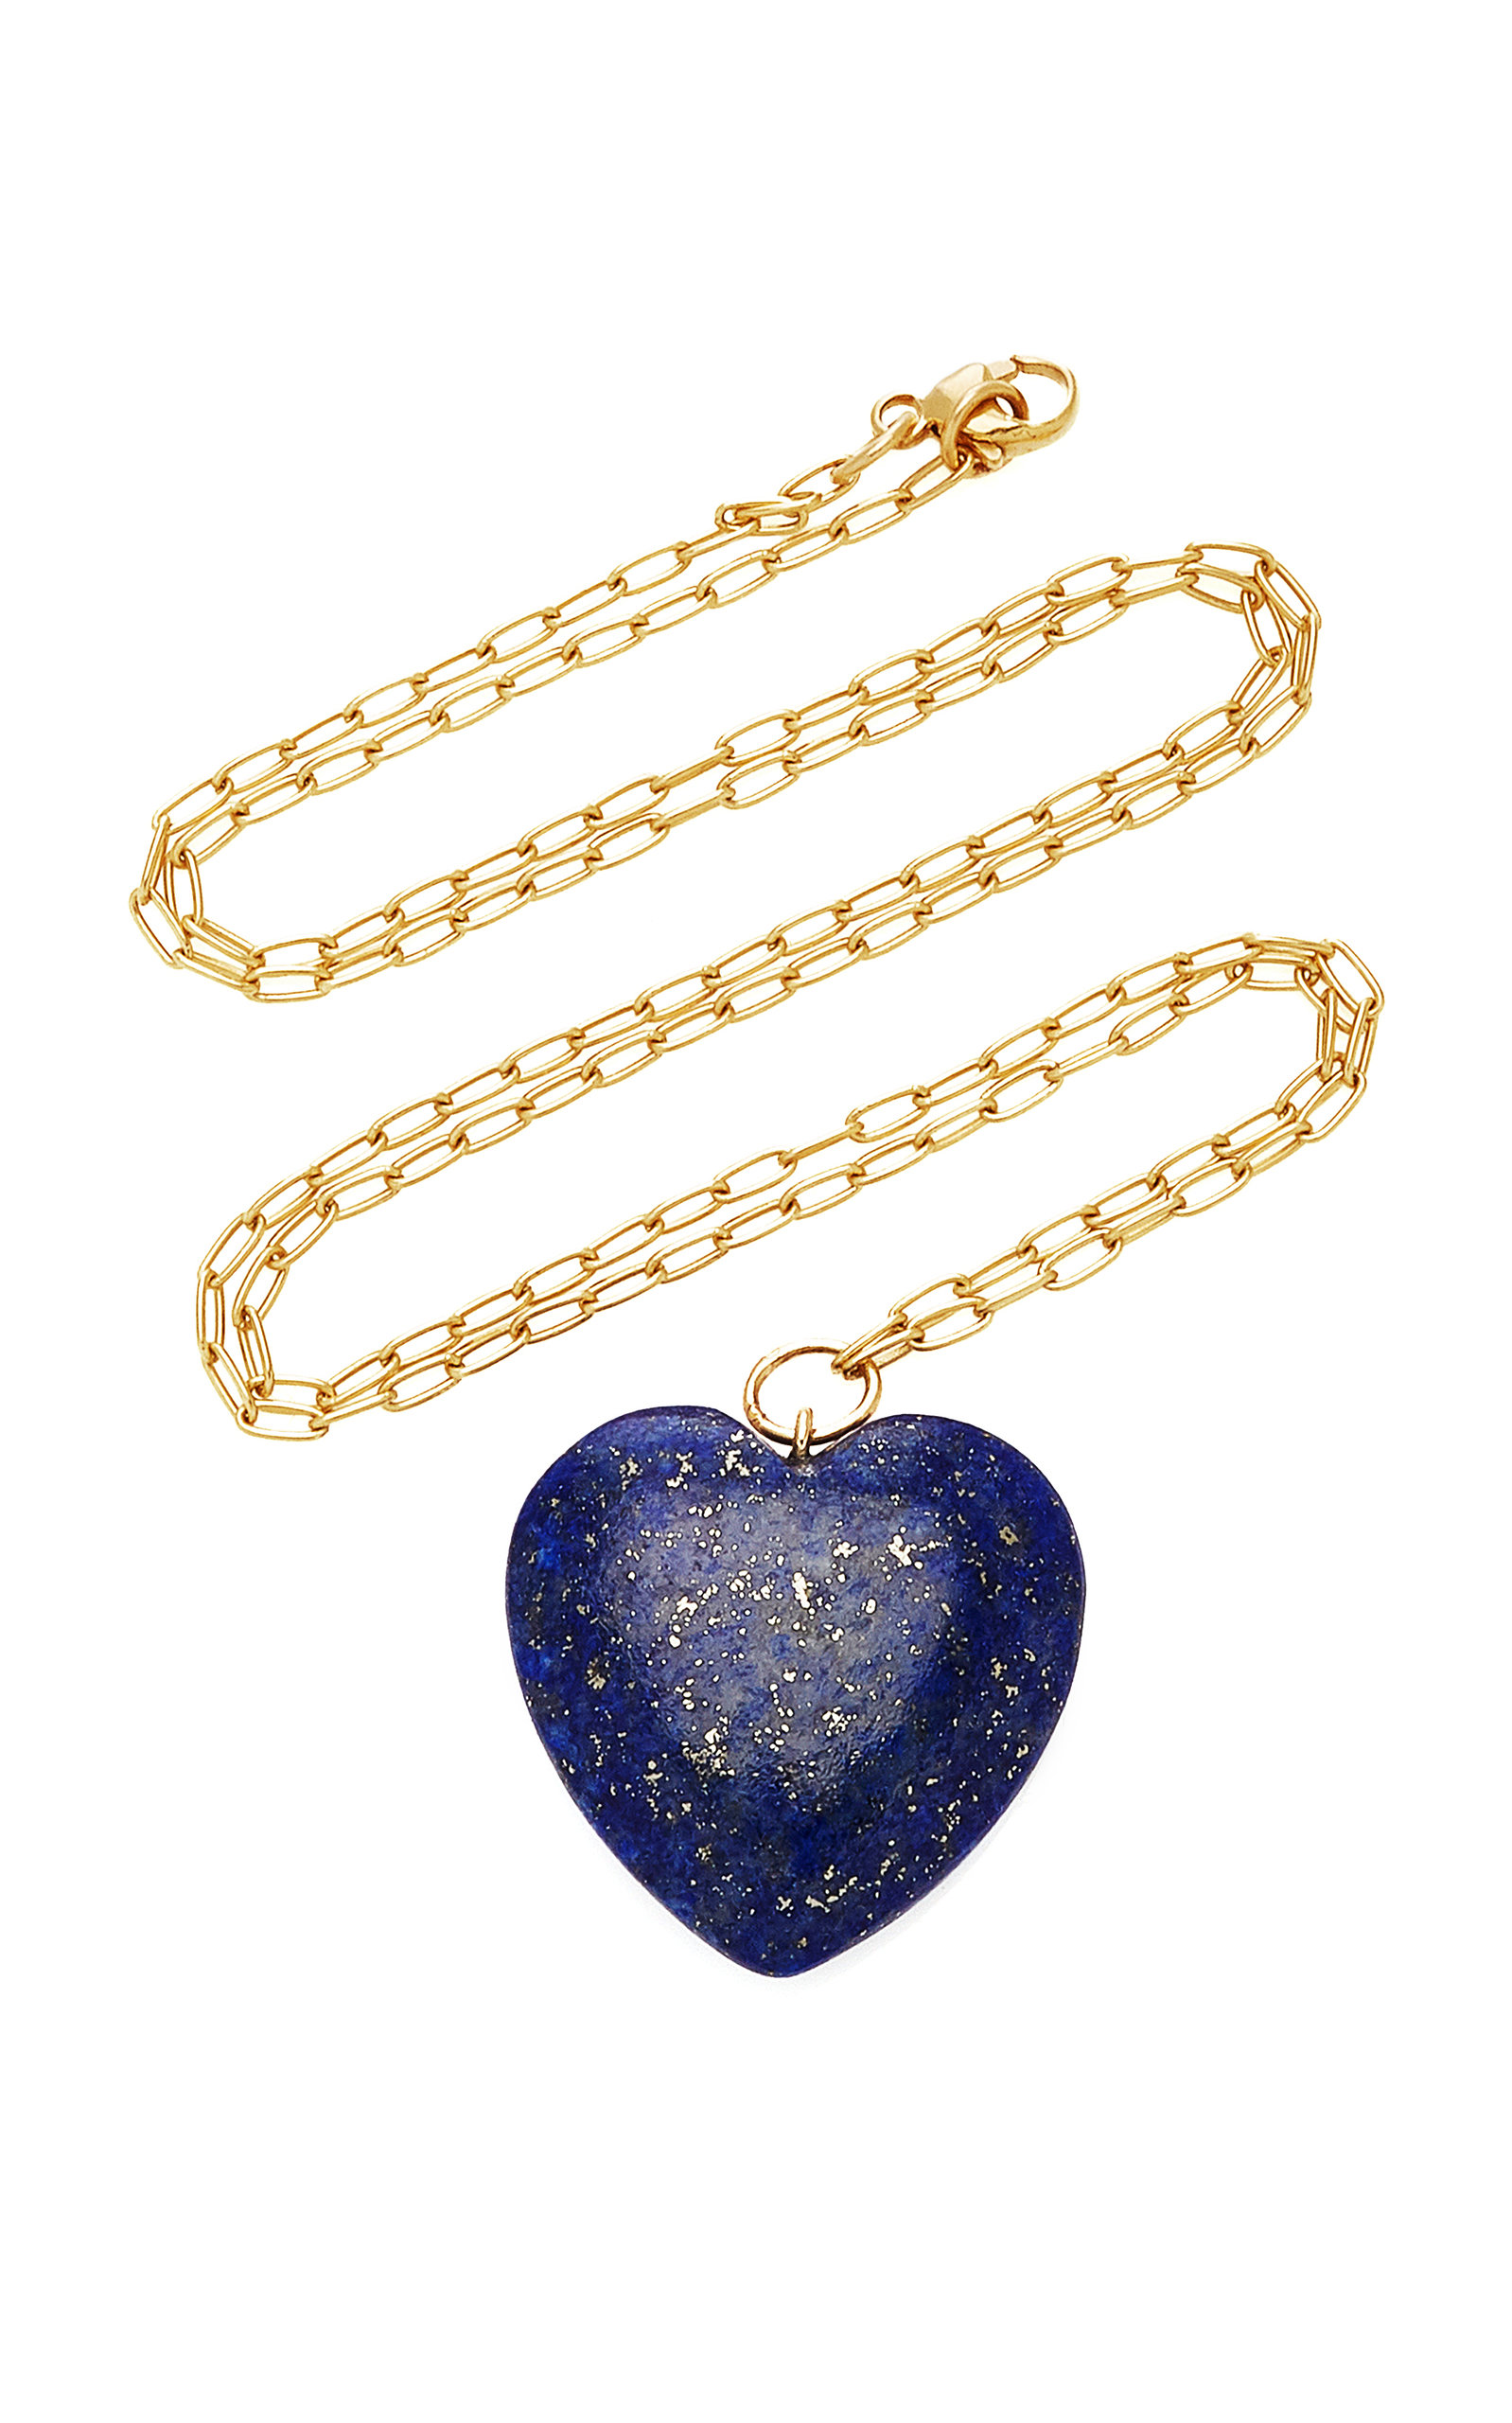 18K Gold And Lapis Lazuli Necklace